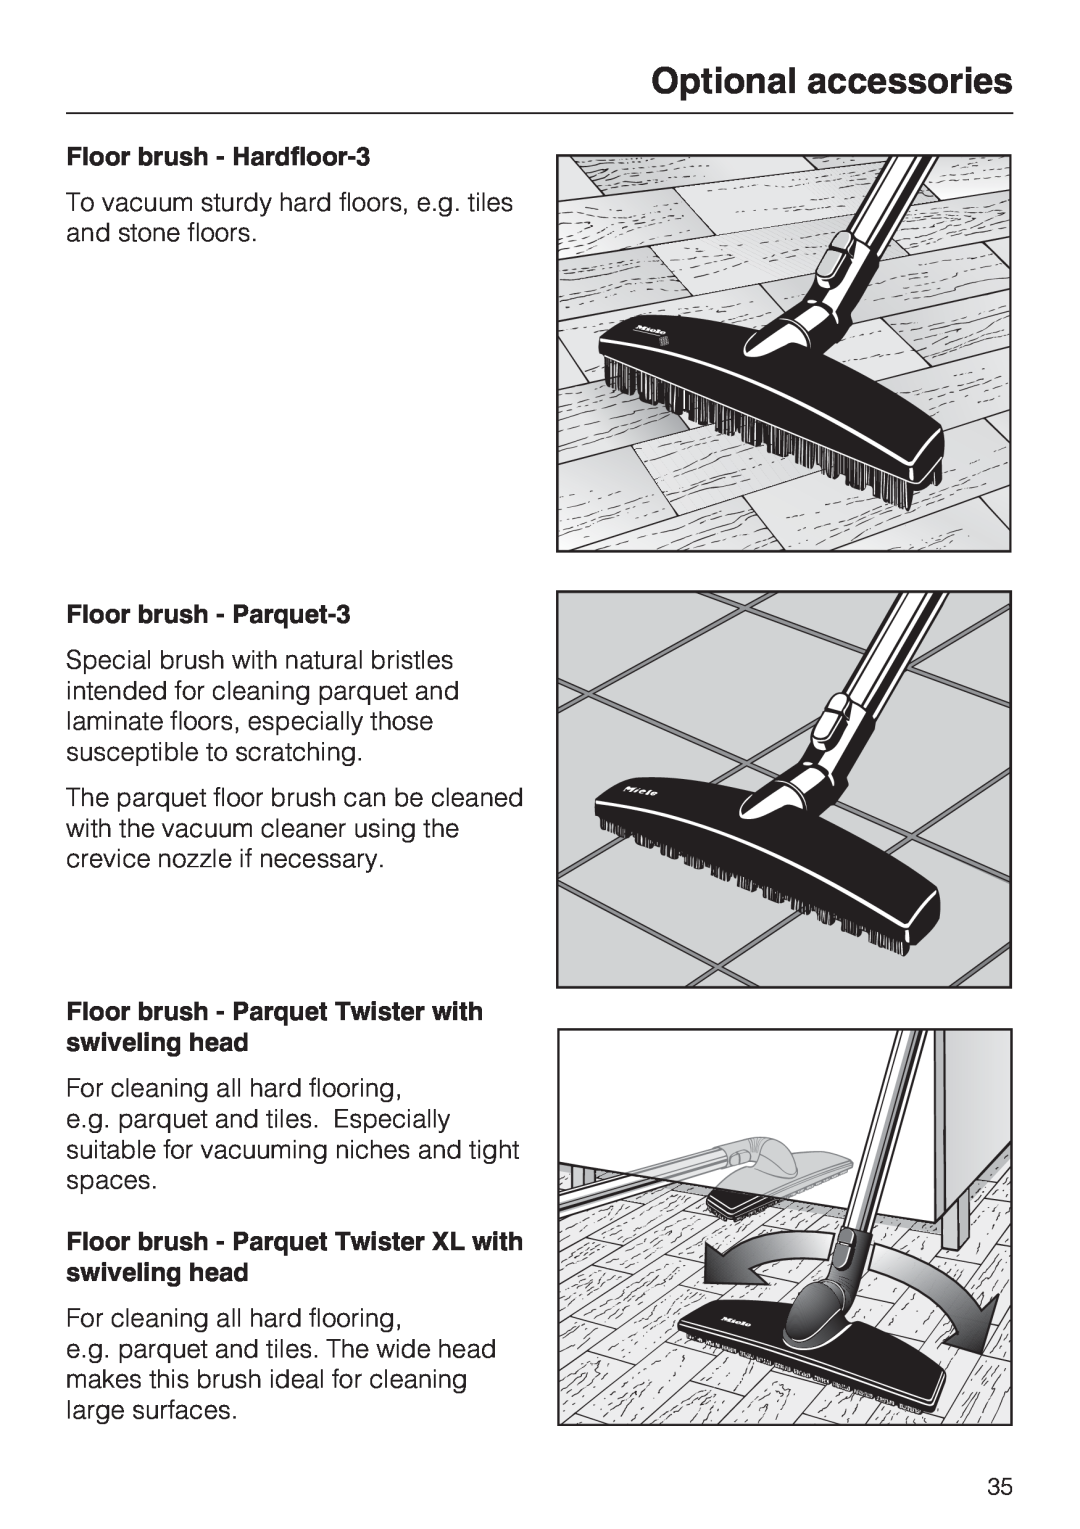 Miele S5981 Floor brush - Hardfloor-3, Floor brush - Parquet-3, Floor brush - Parquet Twister with swiveling head 